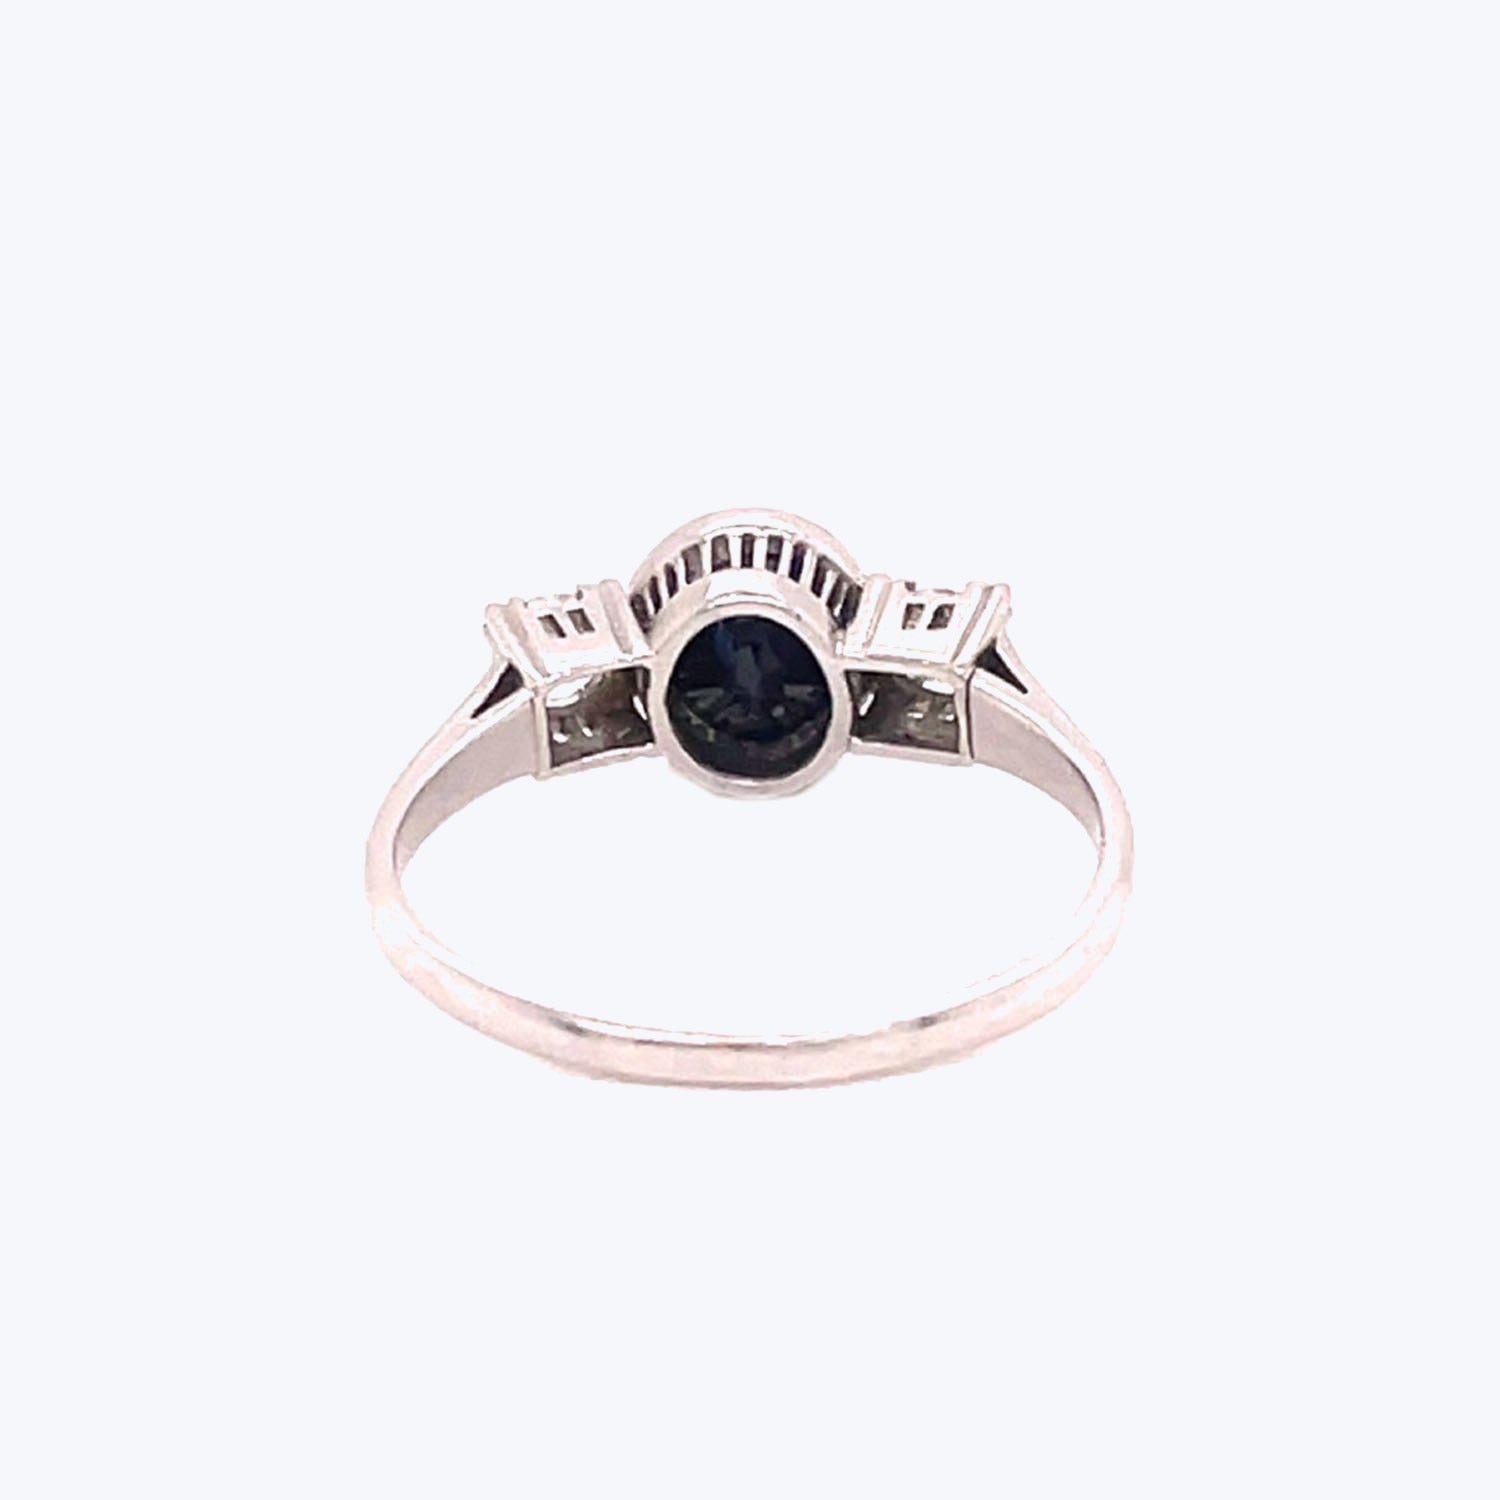 Elegant silver-toned ring with a black gemstone exuding sophistication.